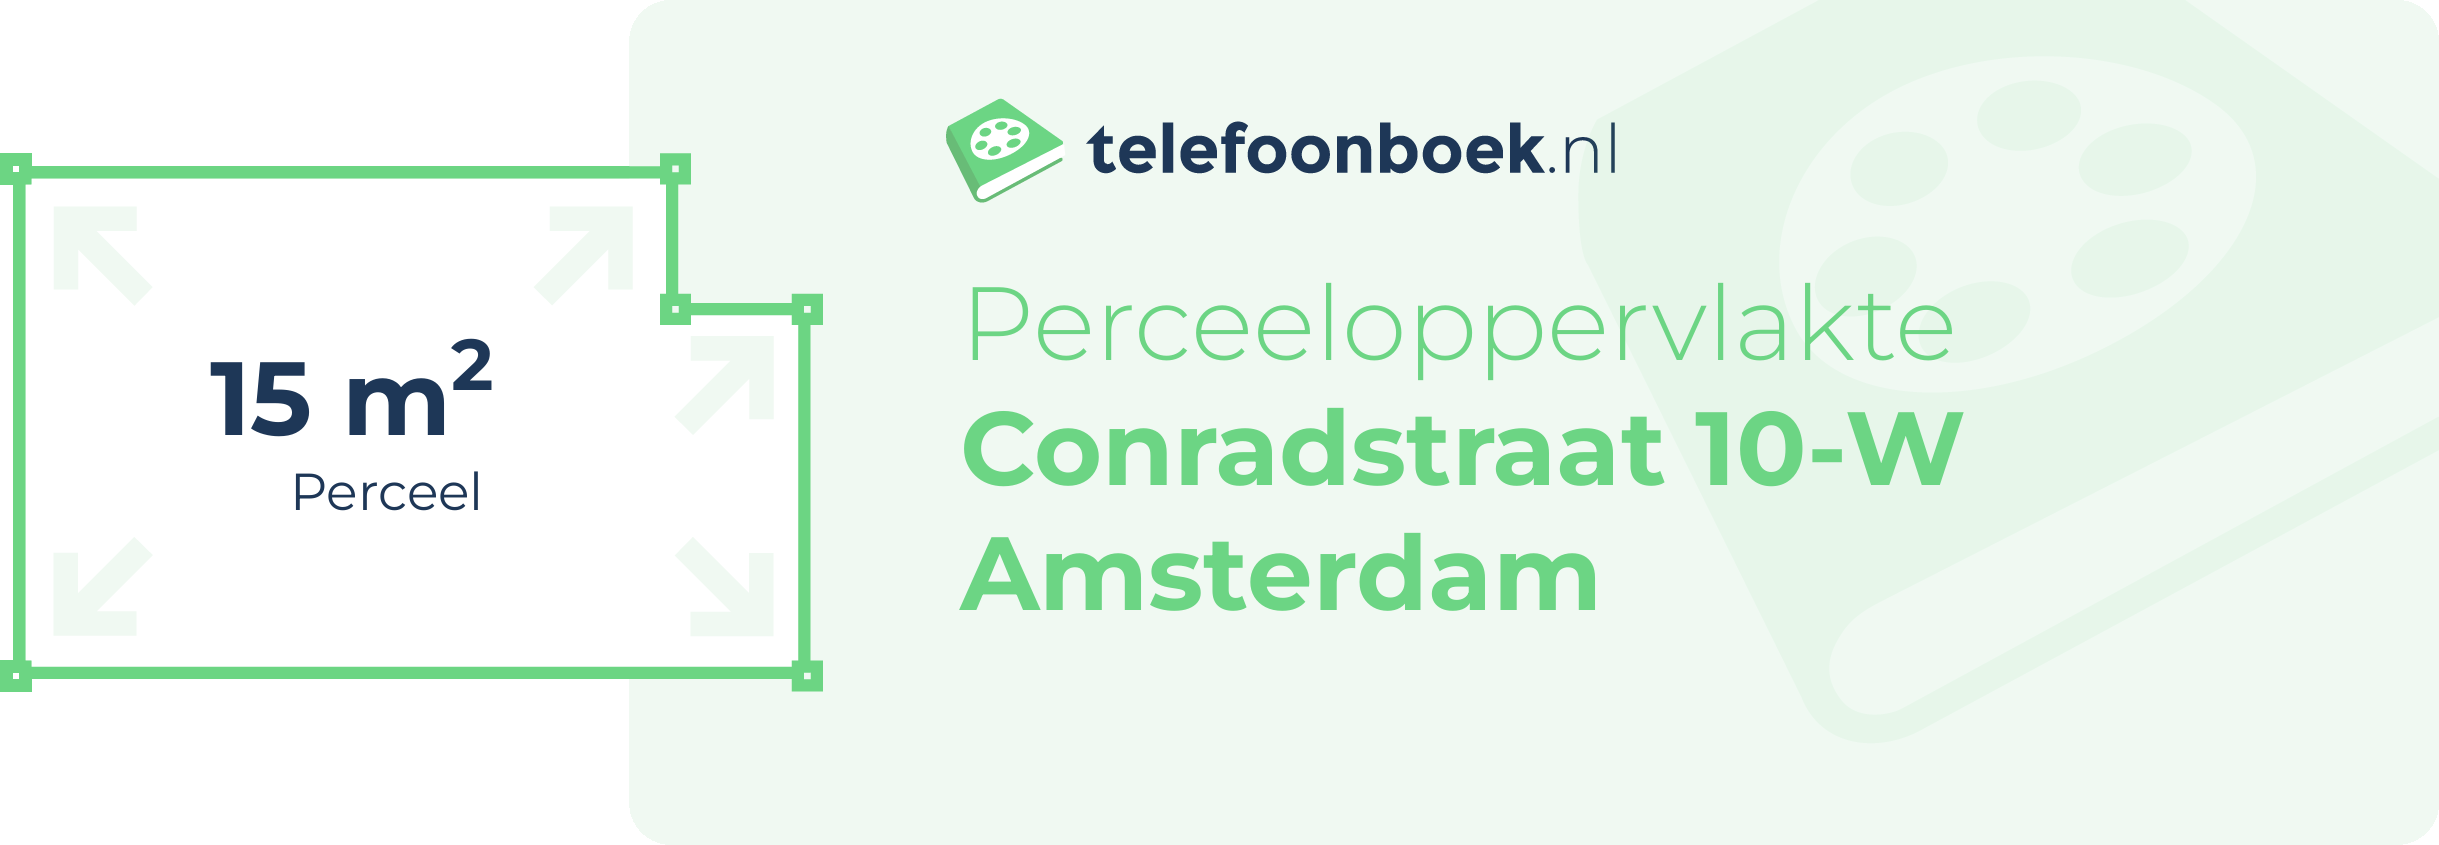 Perceeloppervlakte Conradstraat 10-W Amsterdam